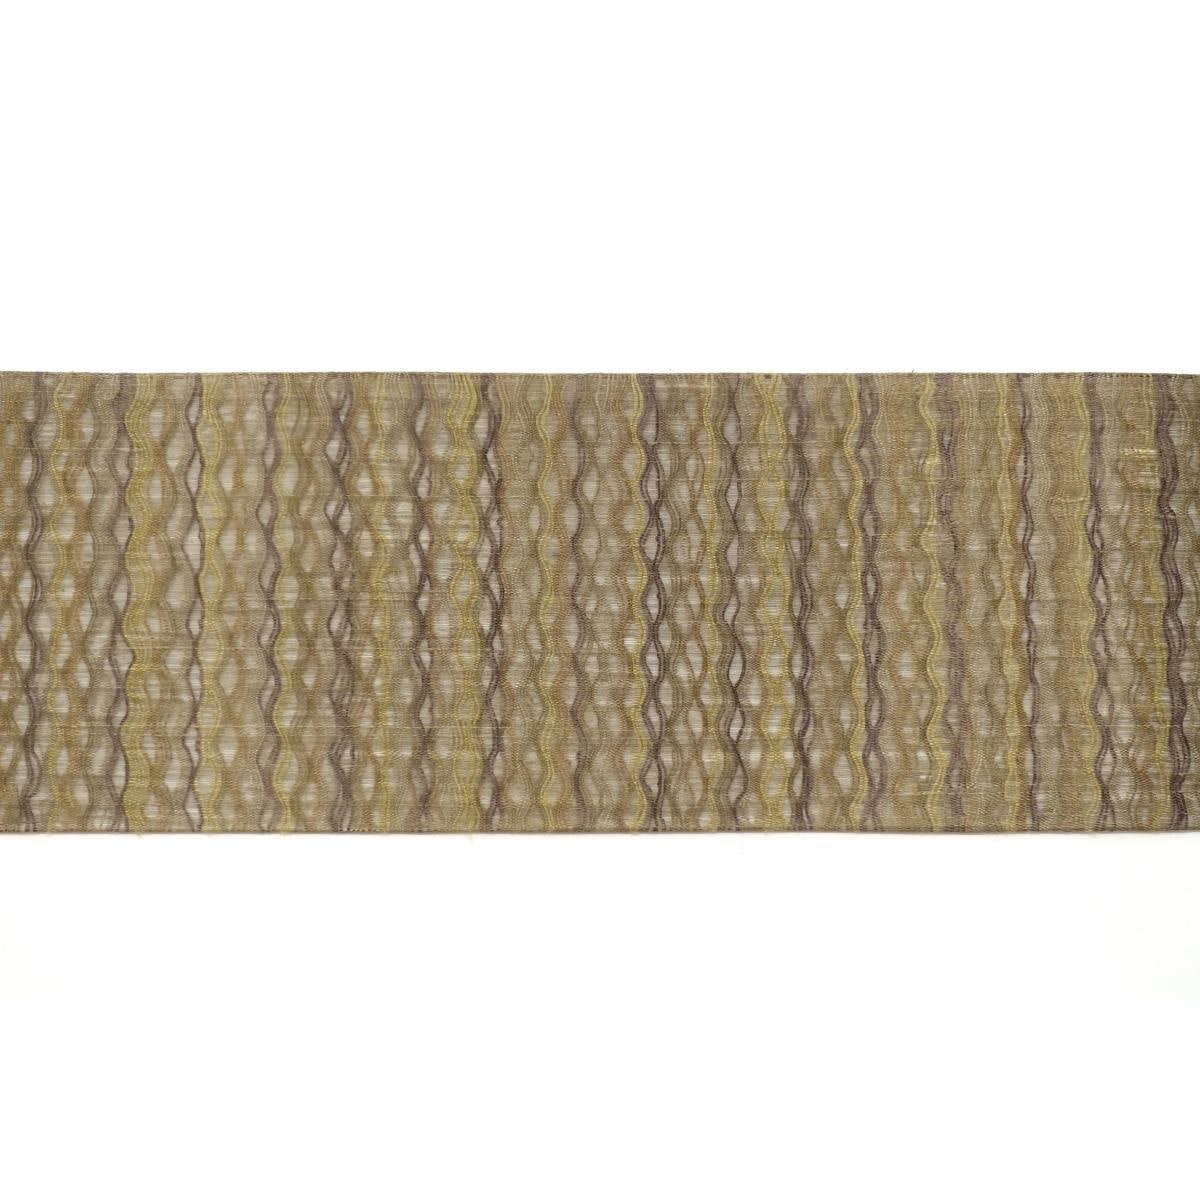 Summer Nagoya Obi pongee watermark weave full pattern